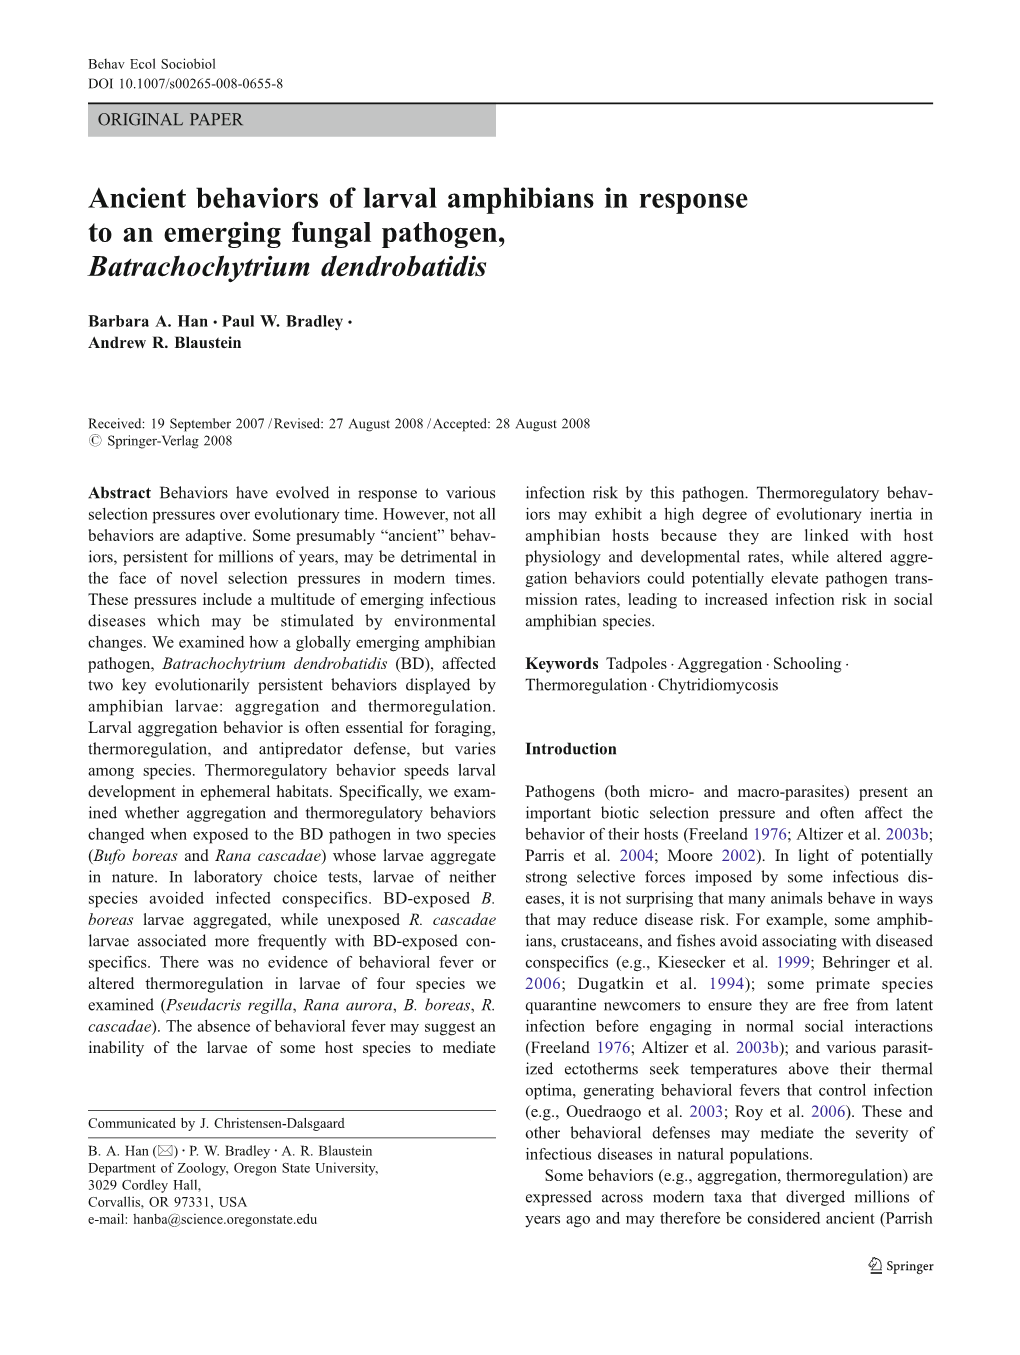 Ancient Behaviors of Larval Amphibians in Response to an Emerging Fungal Pathogen, Batrachochytrium Dendrobatidis